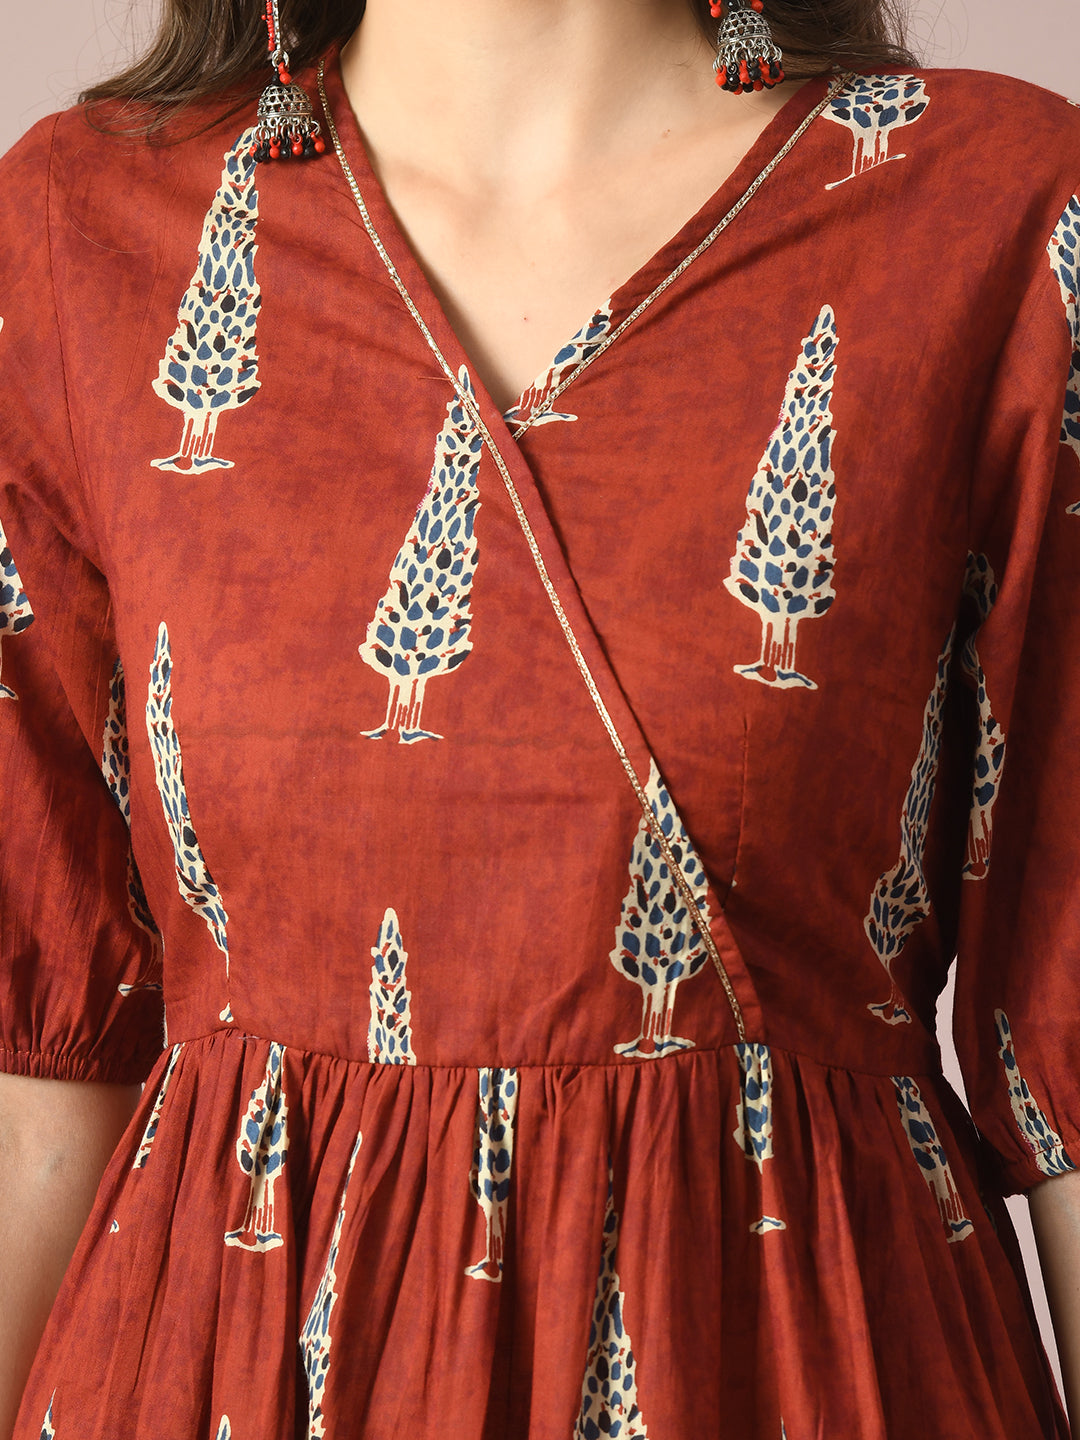 Women's  Rust Printed Cotton V-Neck Empire Party Dress  - Myshka